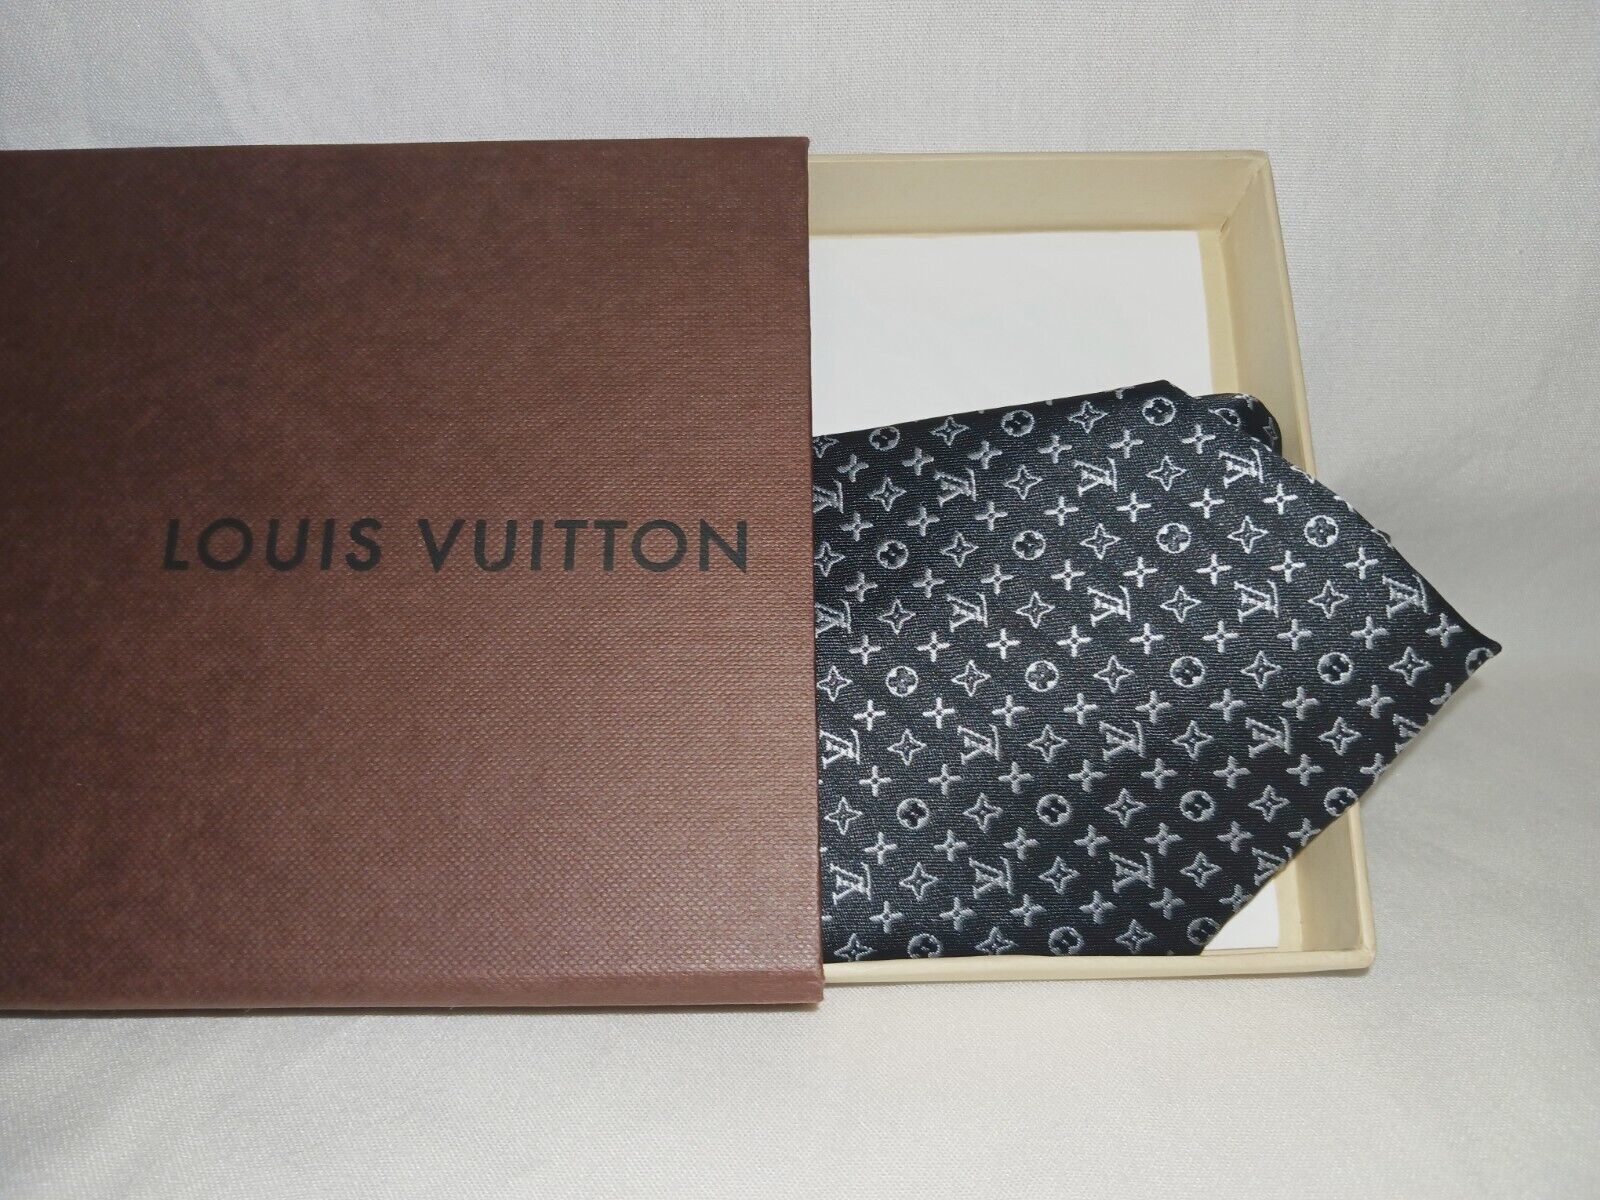 SNEAKERMASK Louis Vuitton Leather Bow Tie 2.0